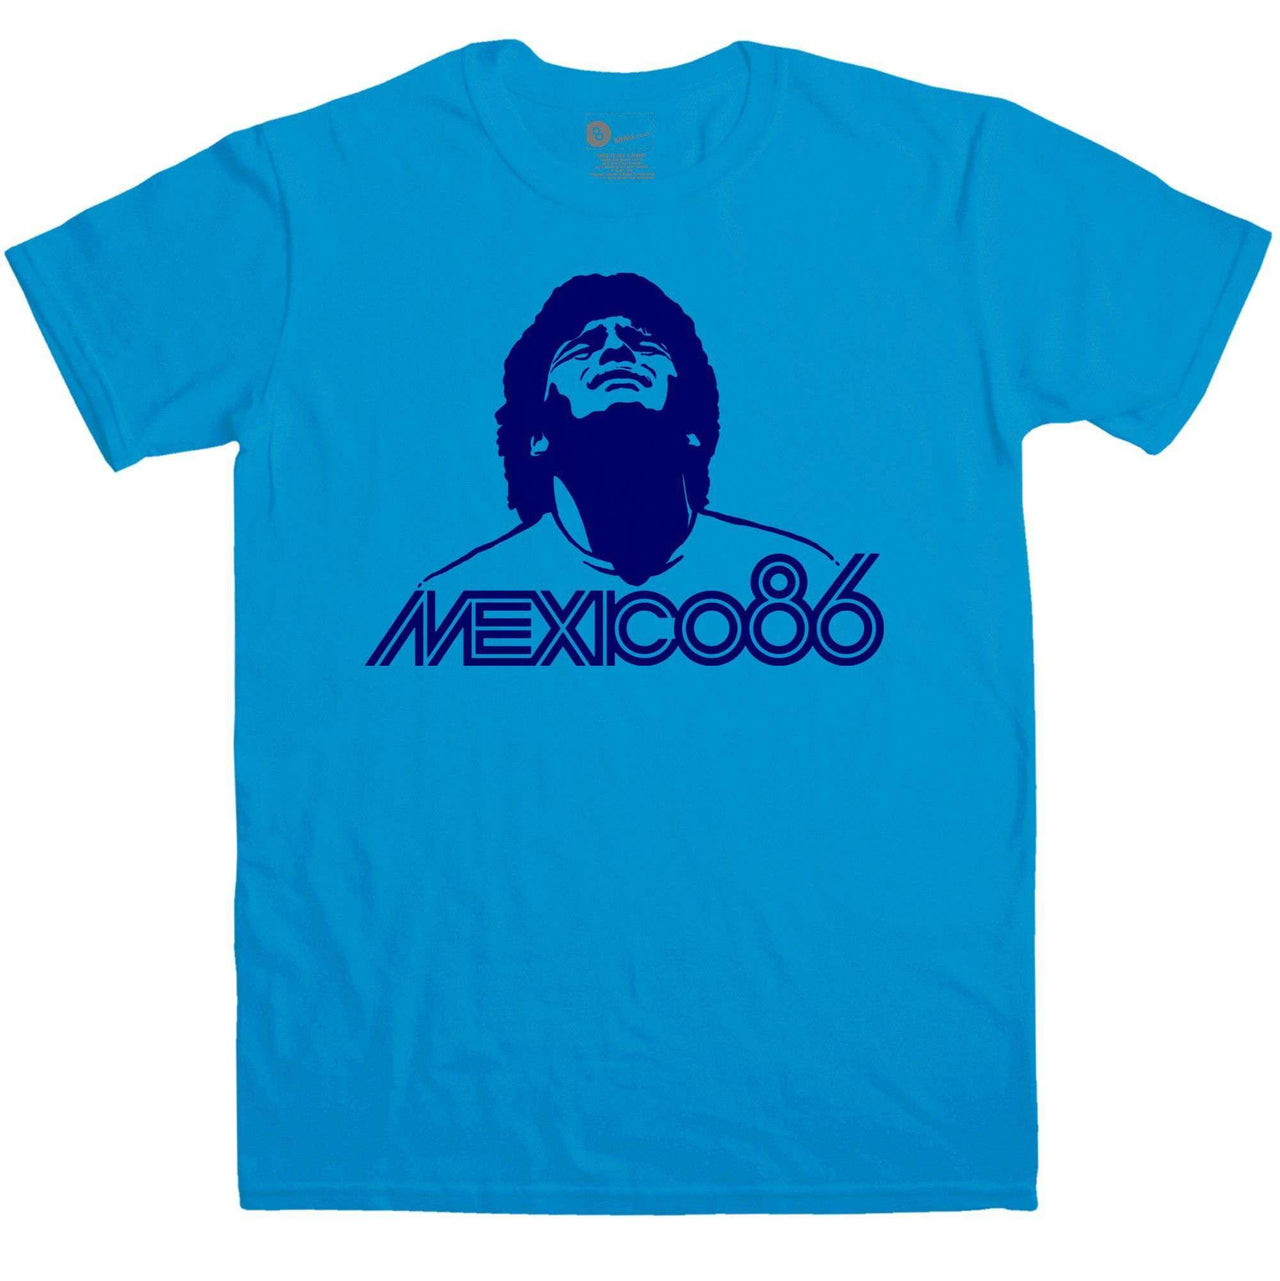 Football Maradona Mexico 86 Unisex T-Shirt For Men And Women 8Ball